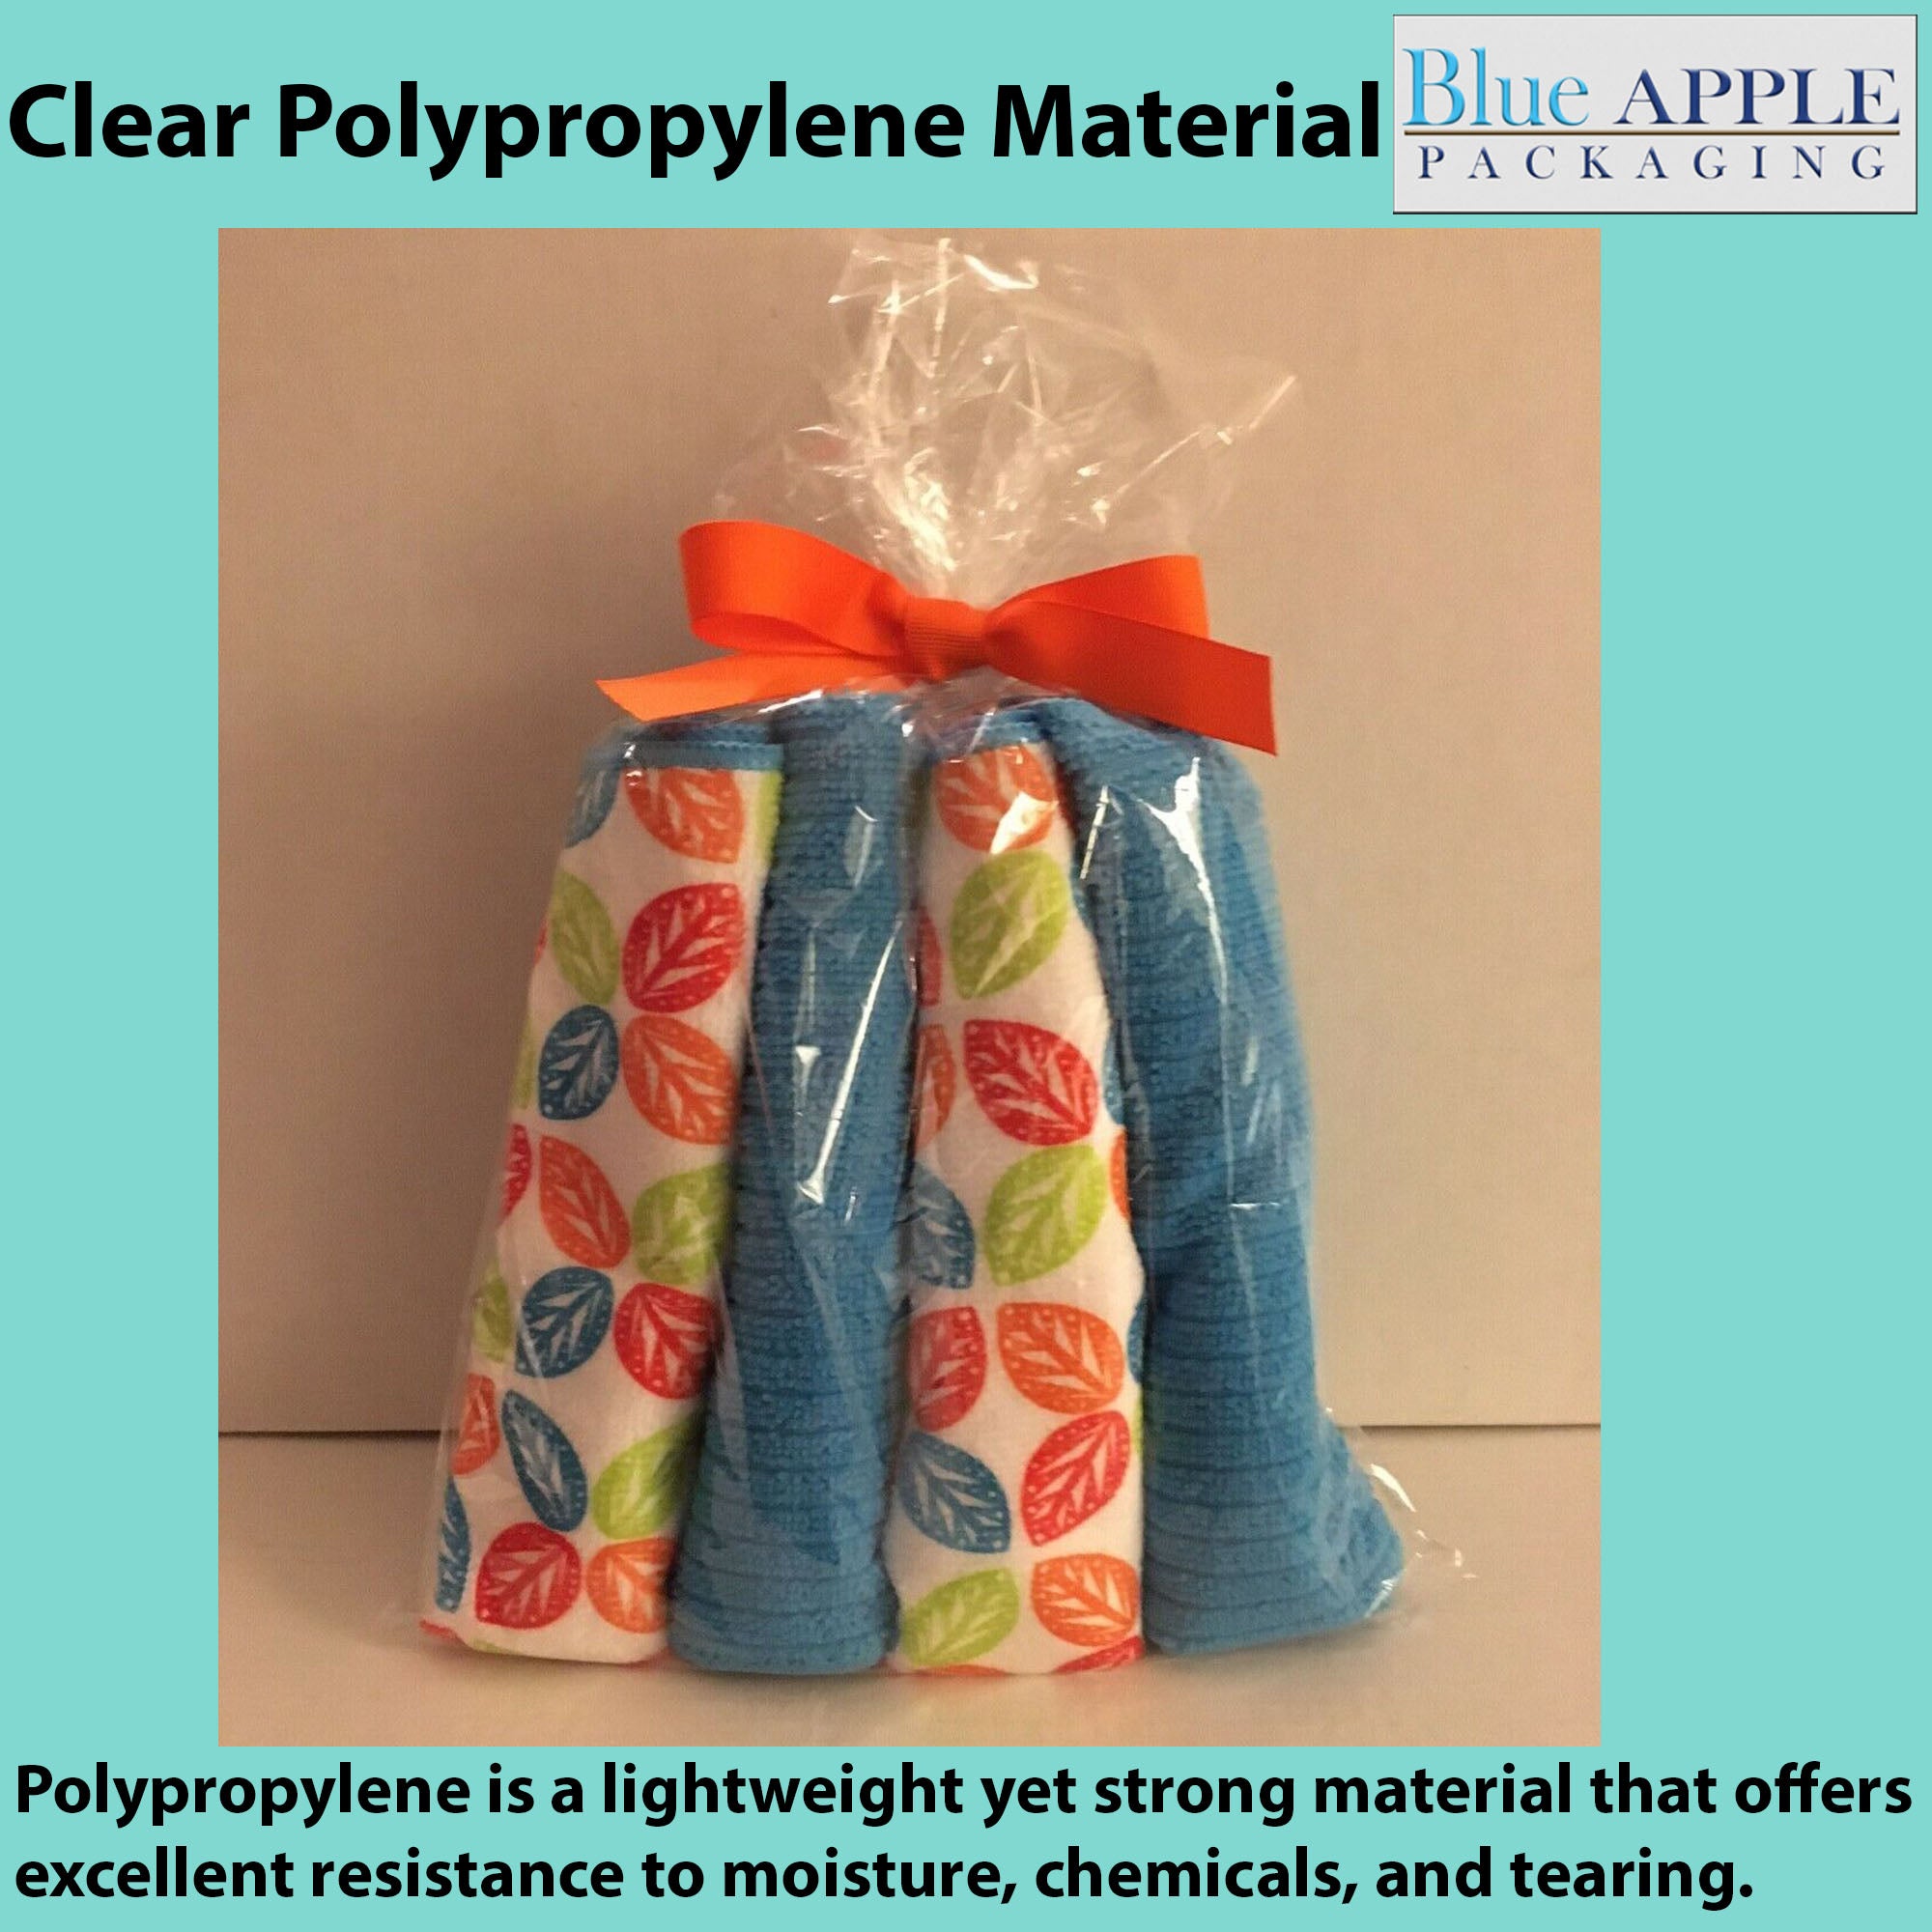 Polypropylene Bags 1.5 Mil 3"X5.5" Clear Flat Open Top